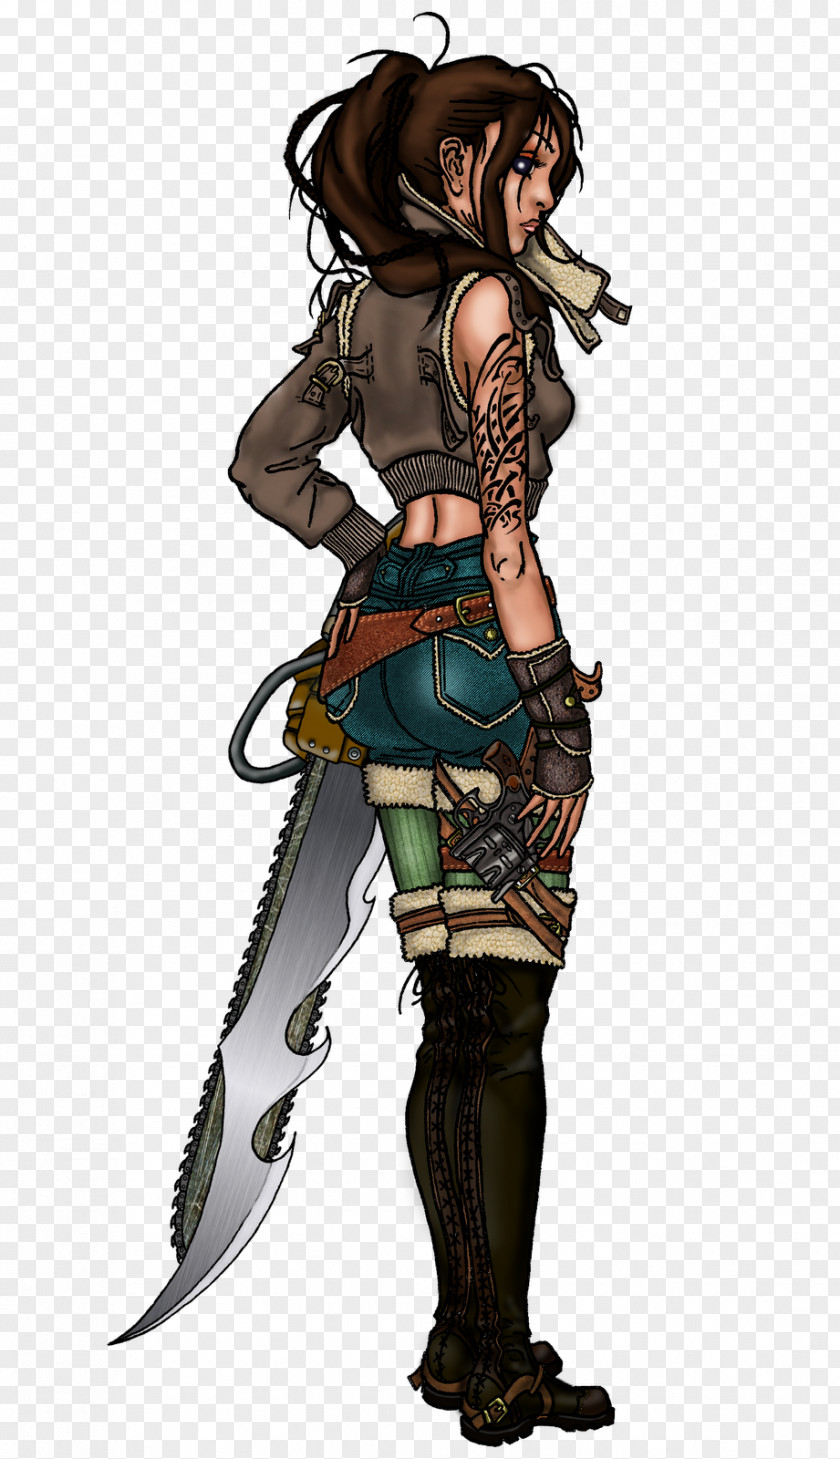 Sword Costume Design The Woman Warrior PNG